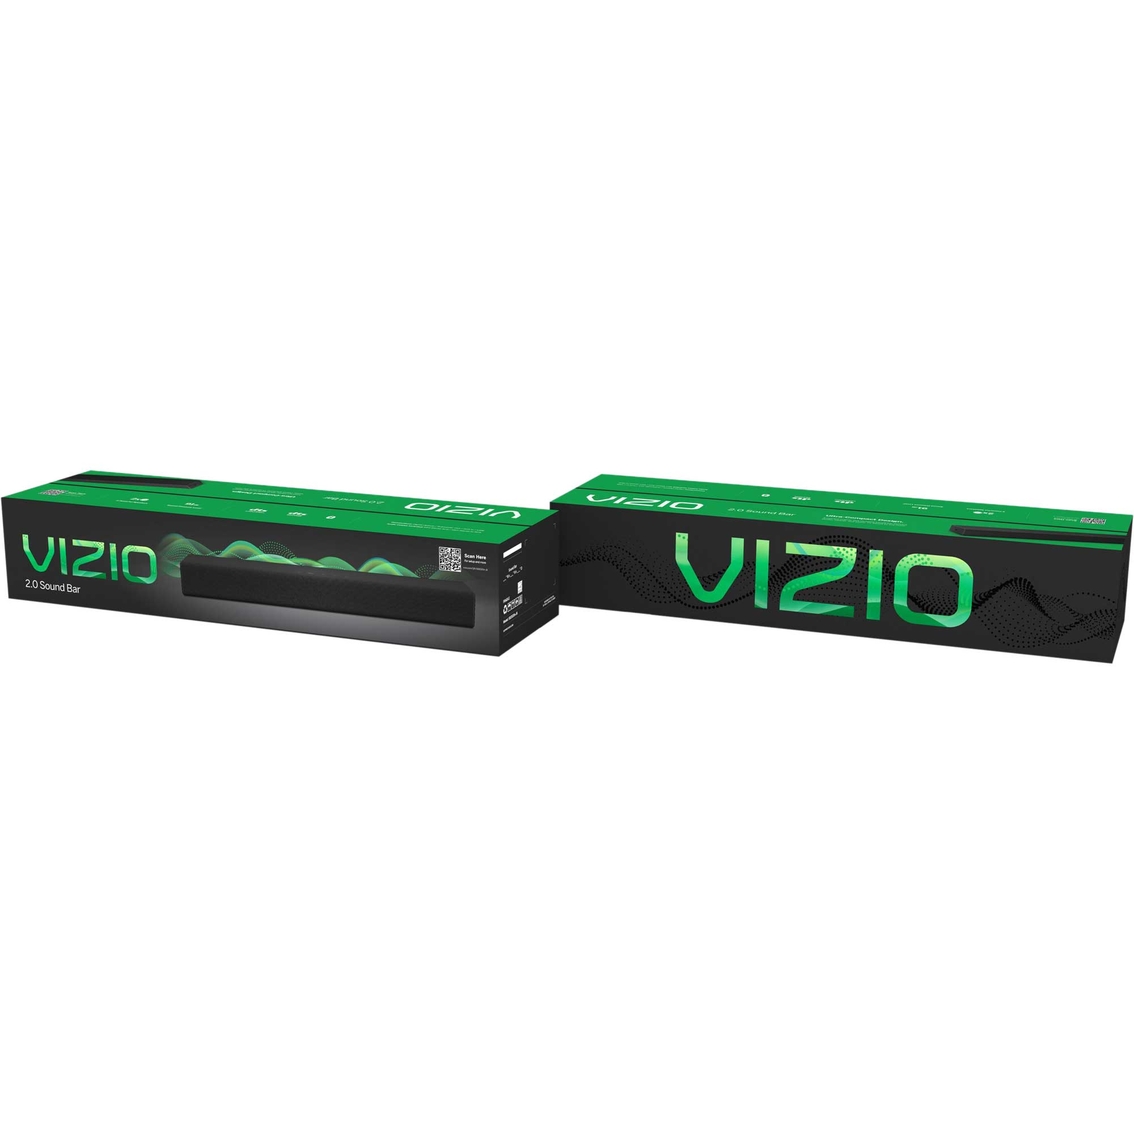 Vizio 2.0 Home Theater Sound Bar SB2020n-J6. - Image 6 of 8